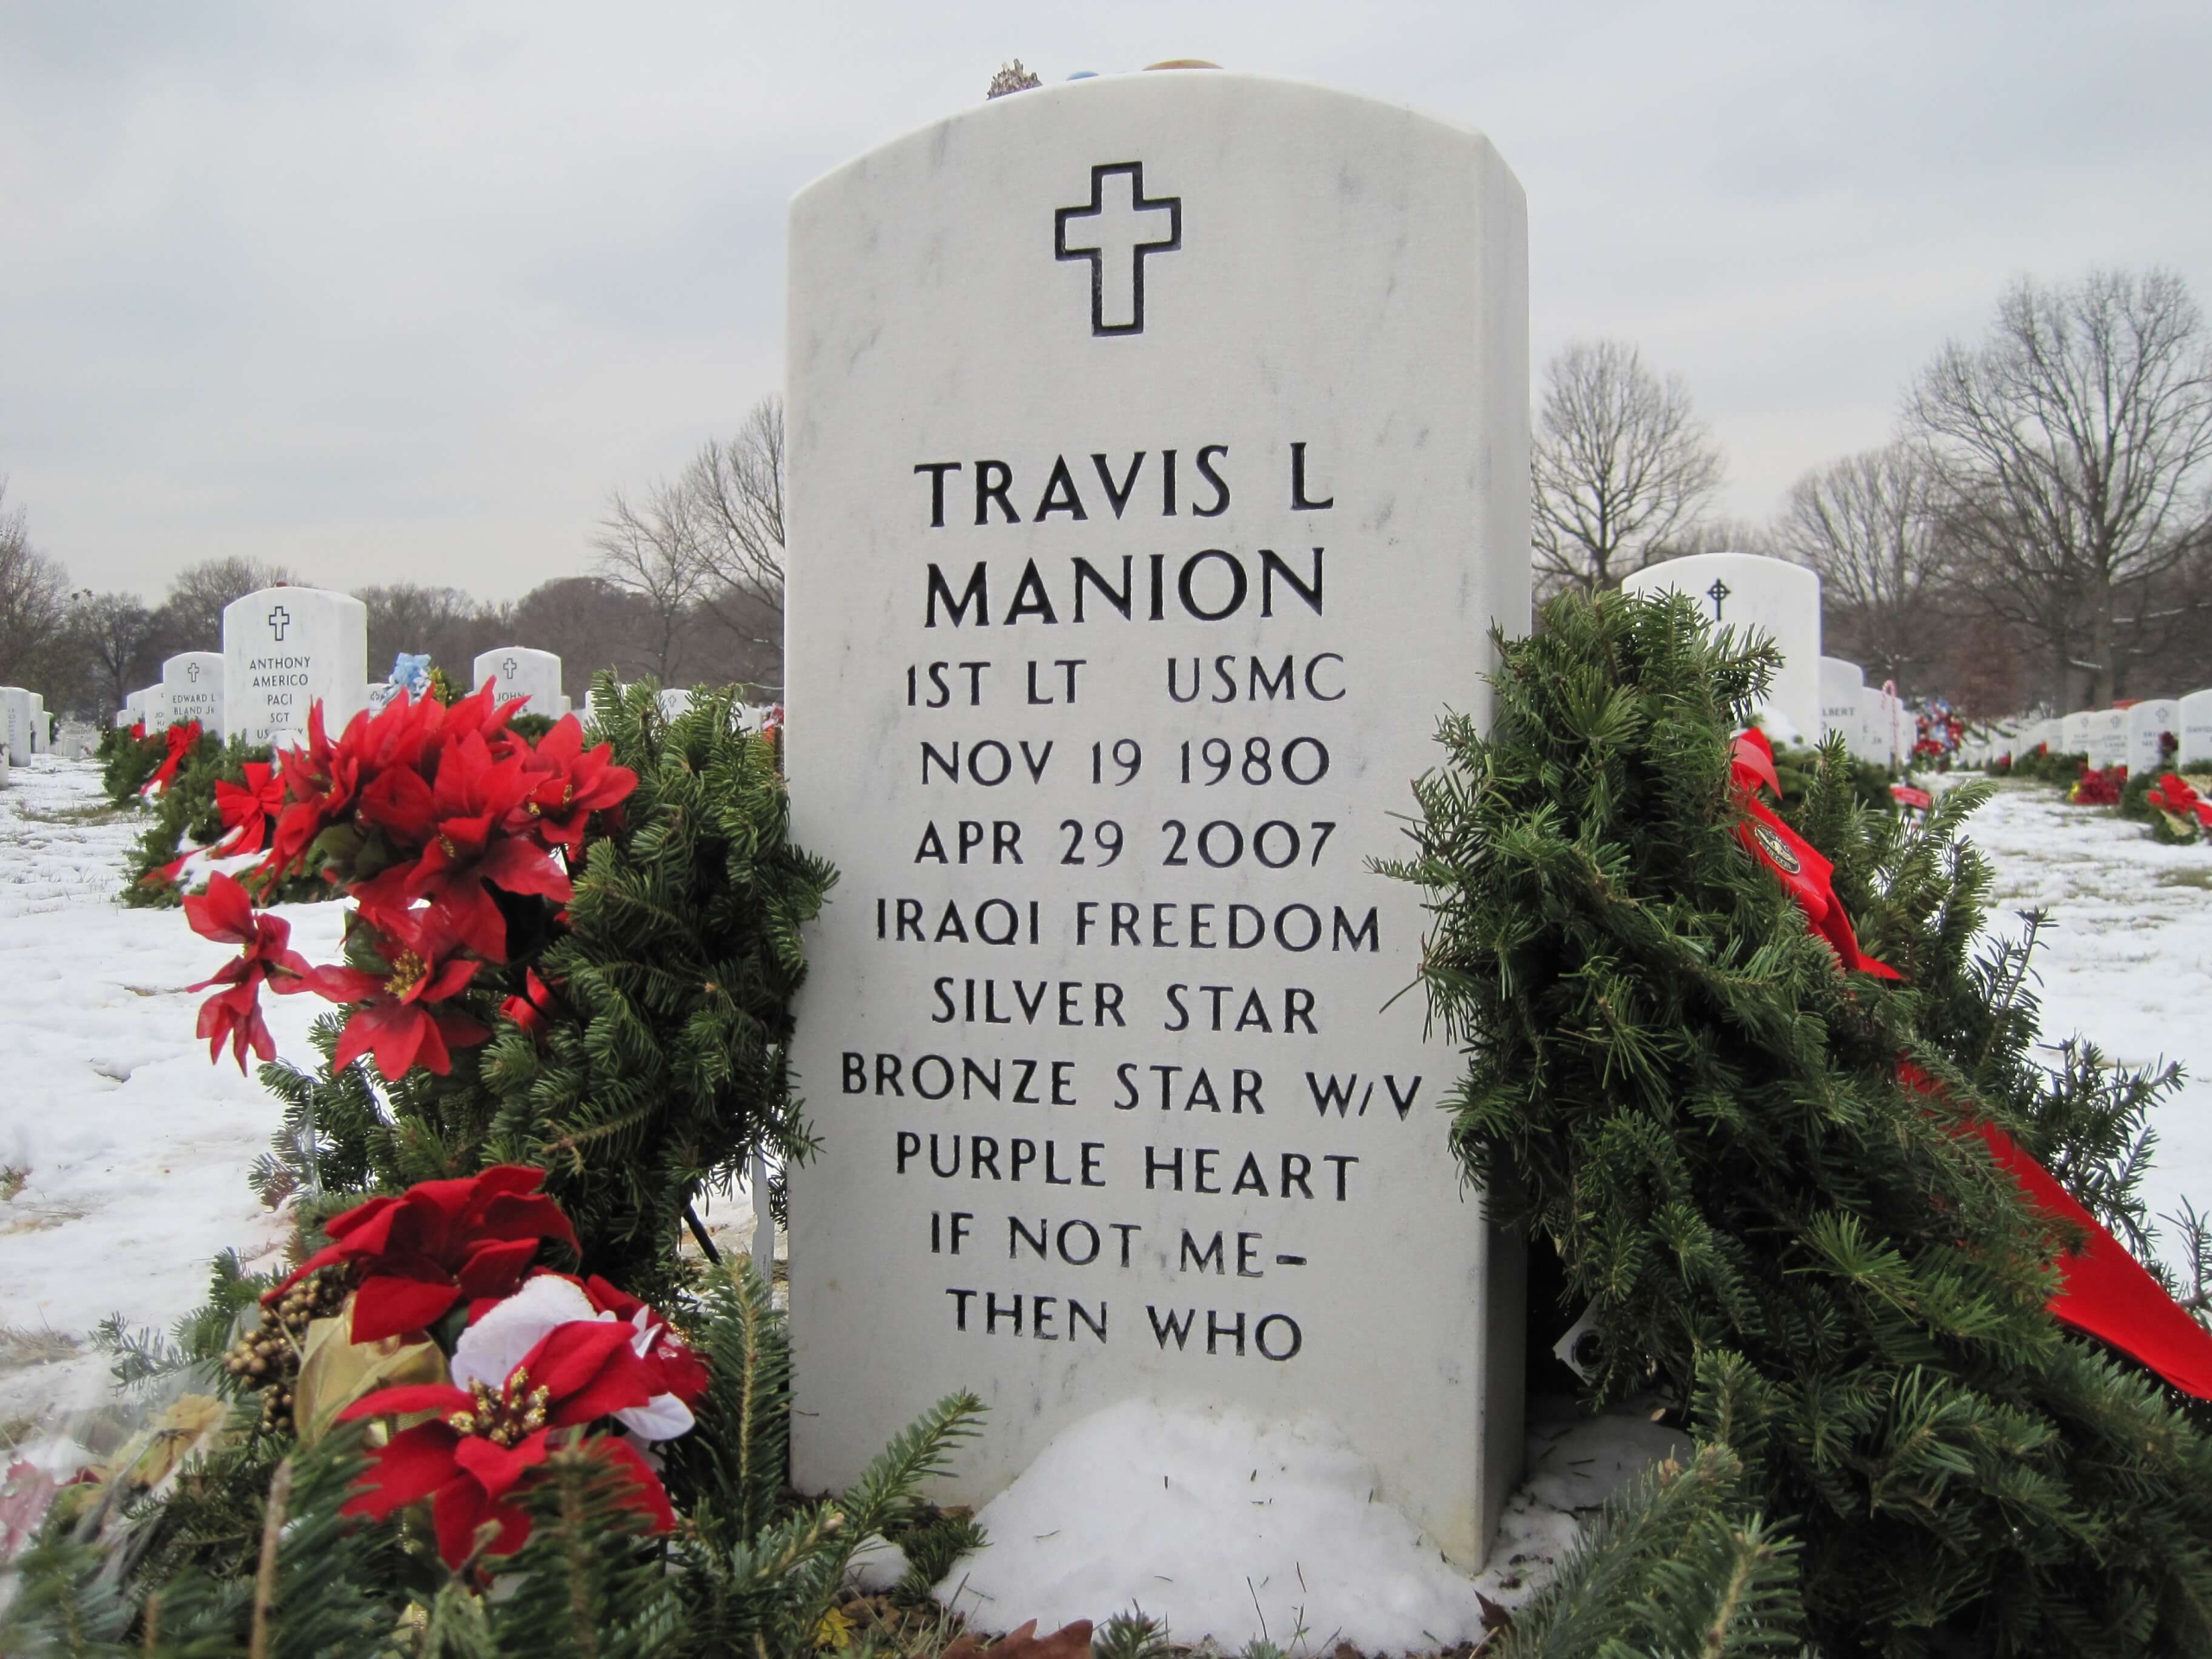 tlmanion-gravesite-photo-by-eileen-horan-december-2010-002